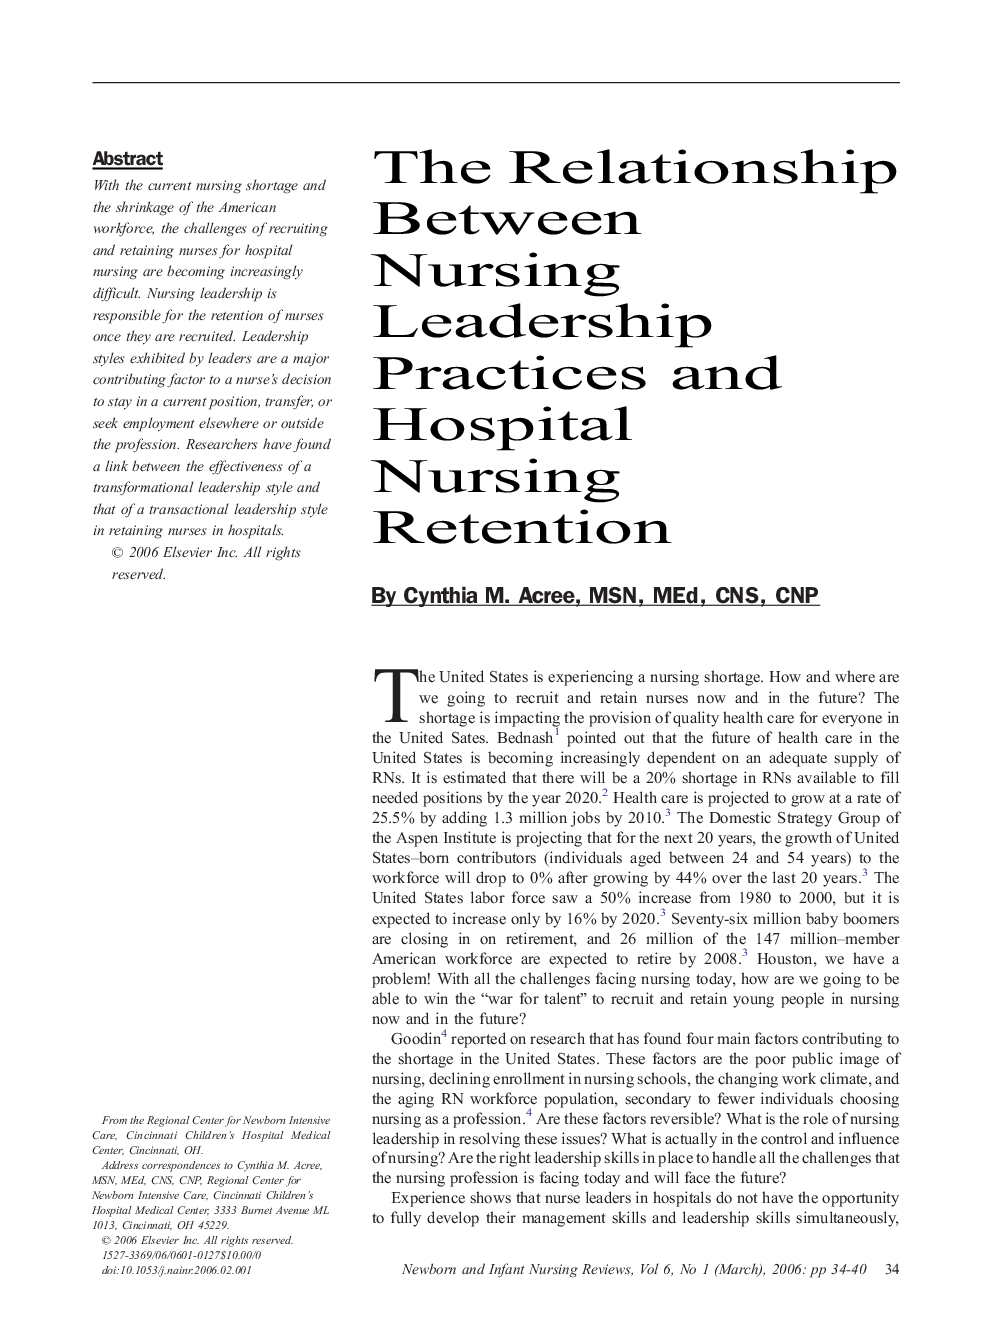 The Relationship Between Nursing Leadership Practices and Hospital Nursing Retention